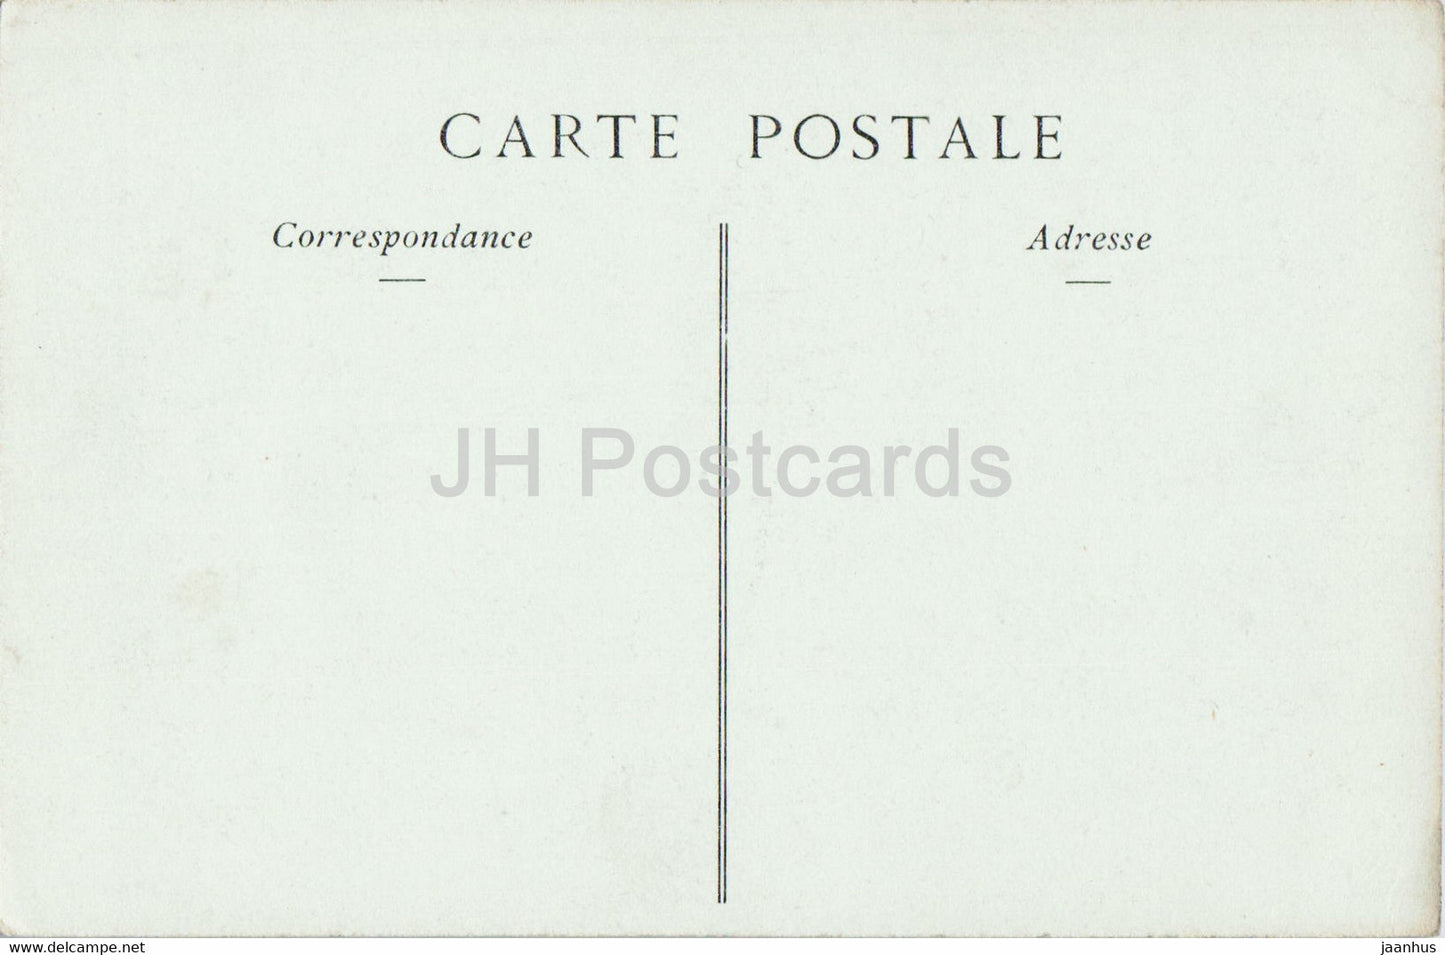 Grenoble - La Tronche et le Saint Eynard - 14 - old postcard - France - unused